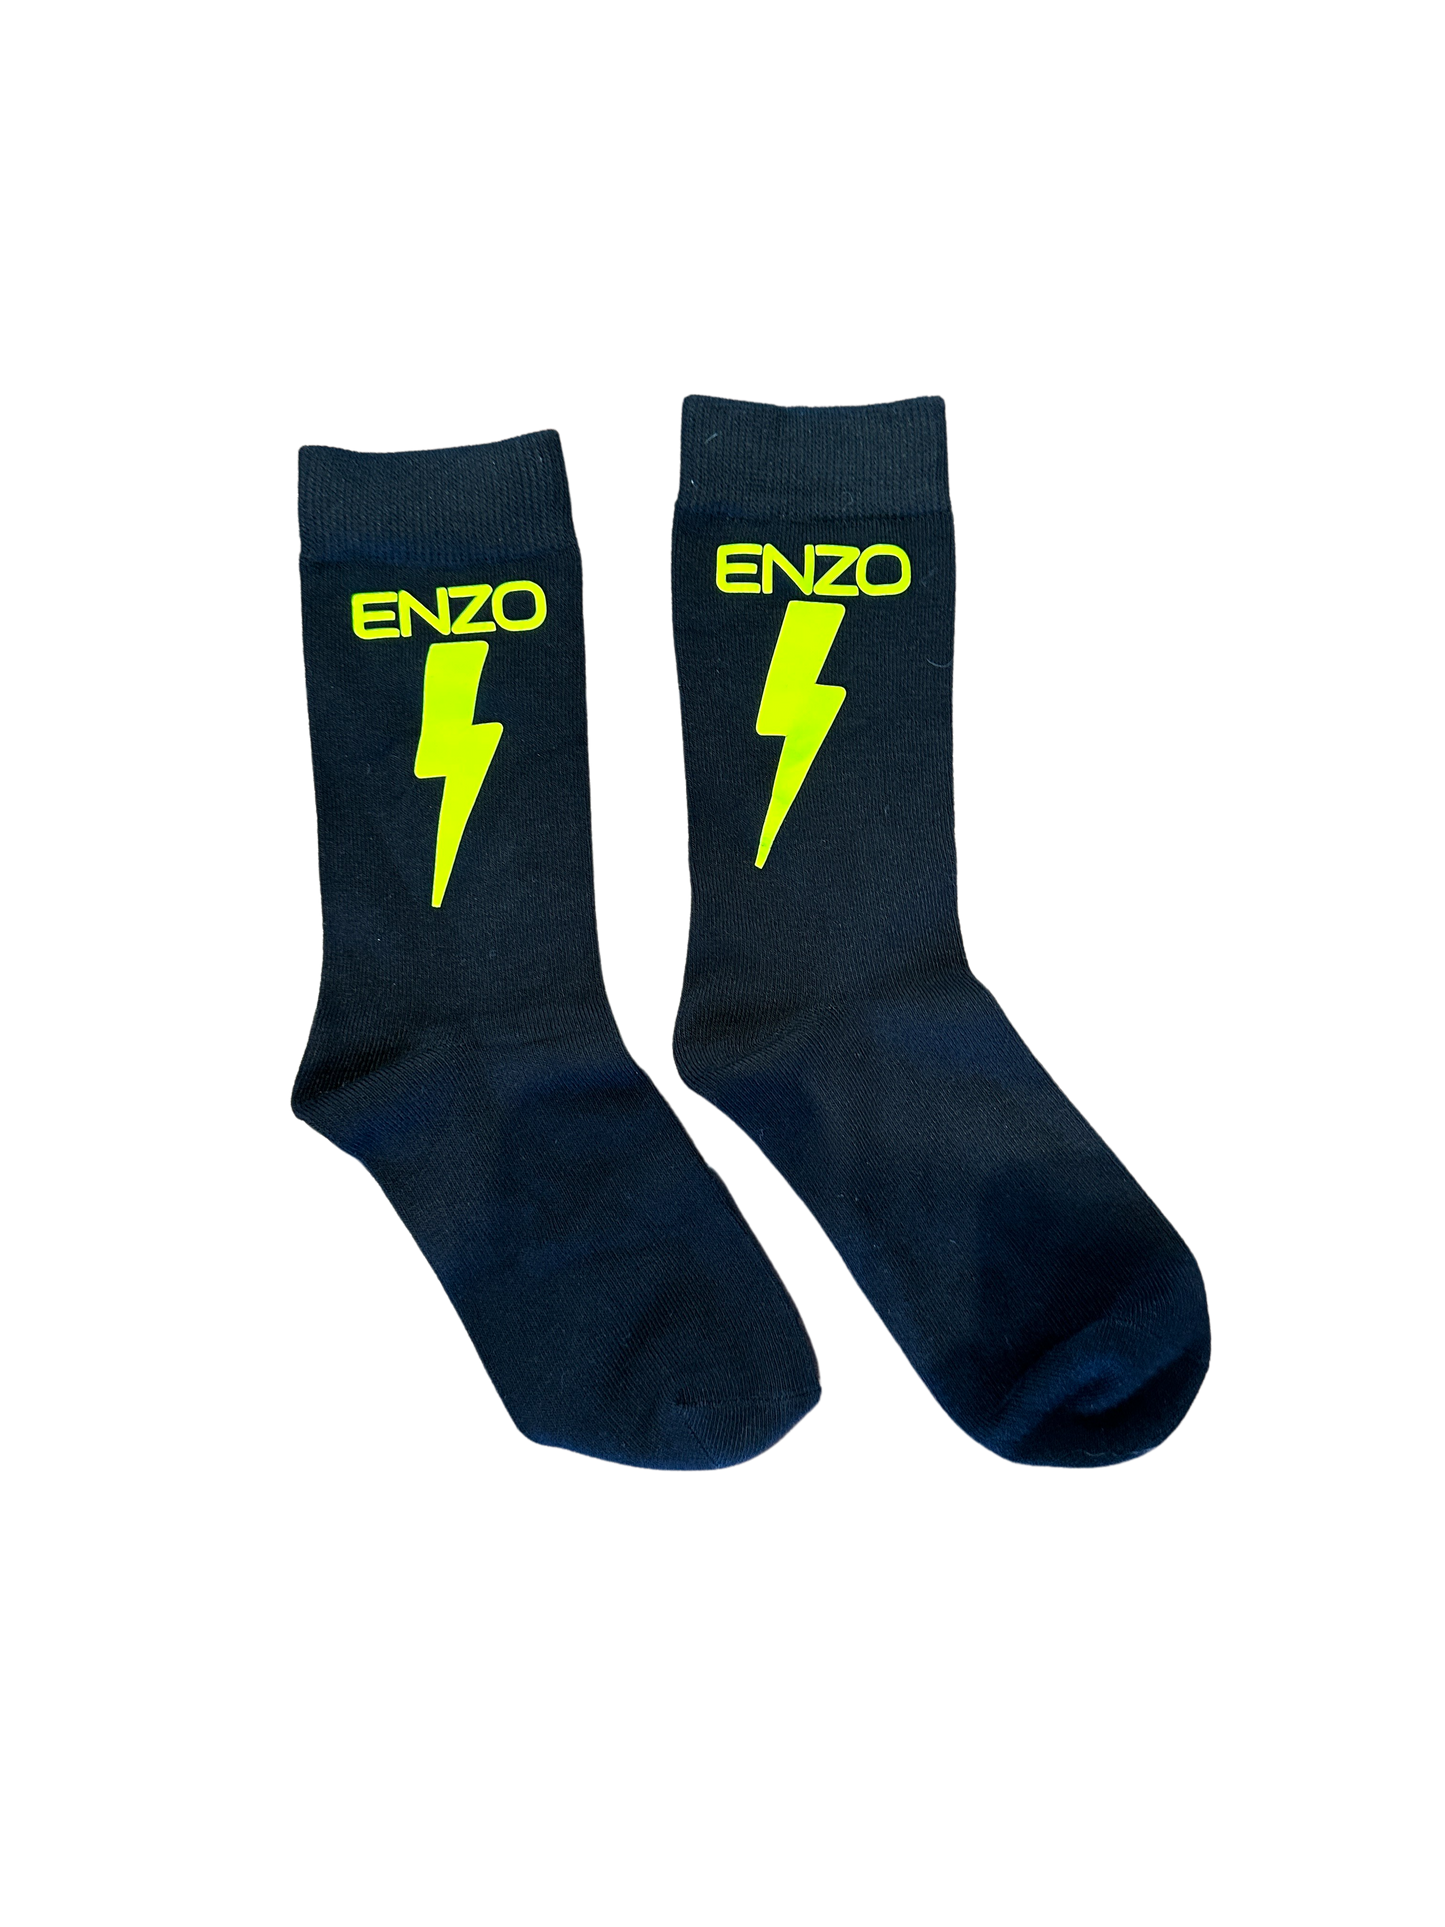 Electric Enzo Socks